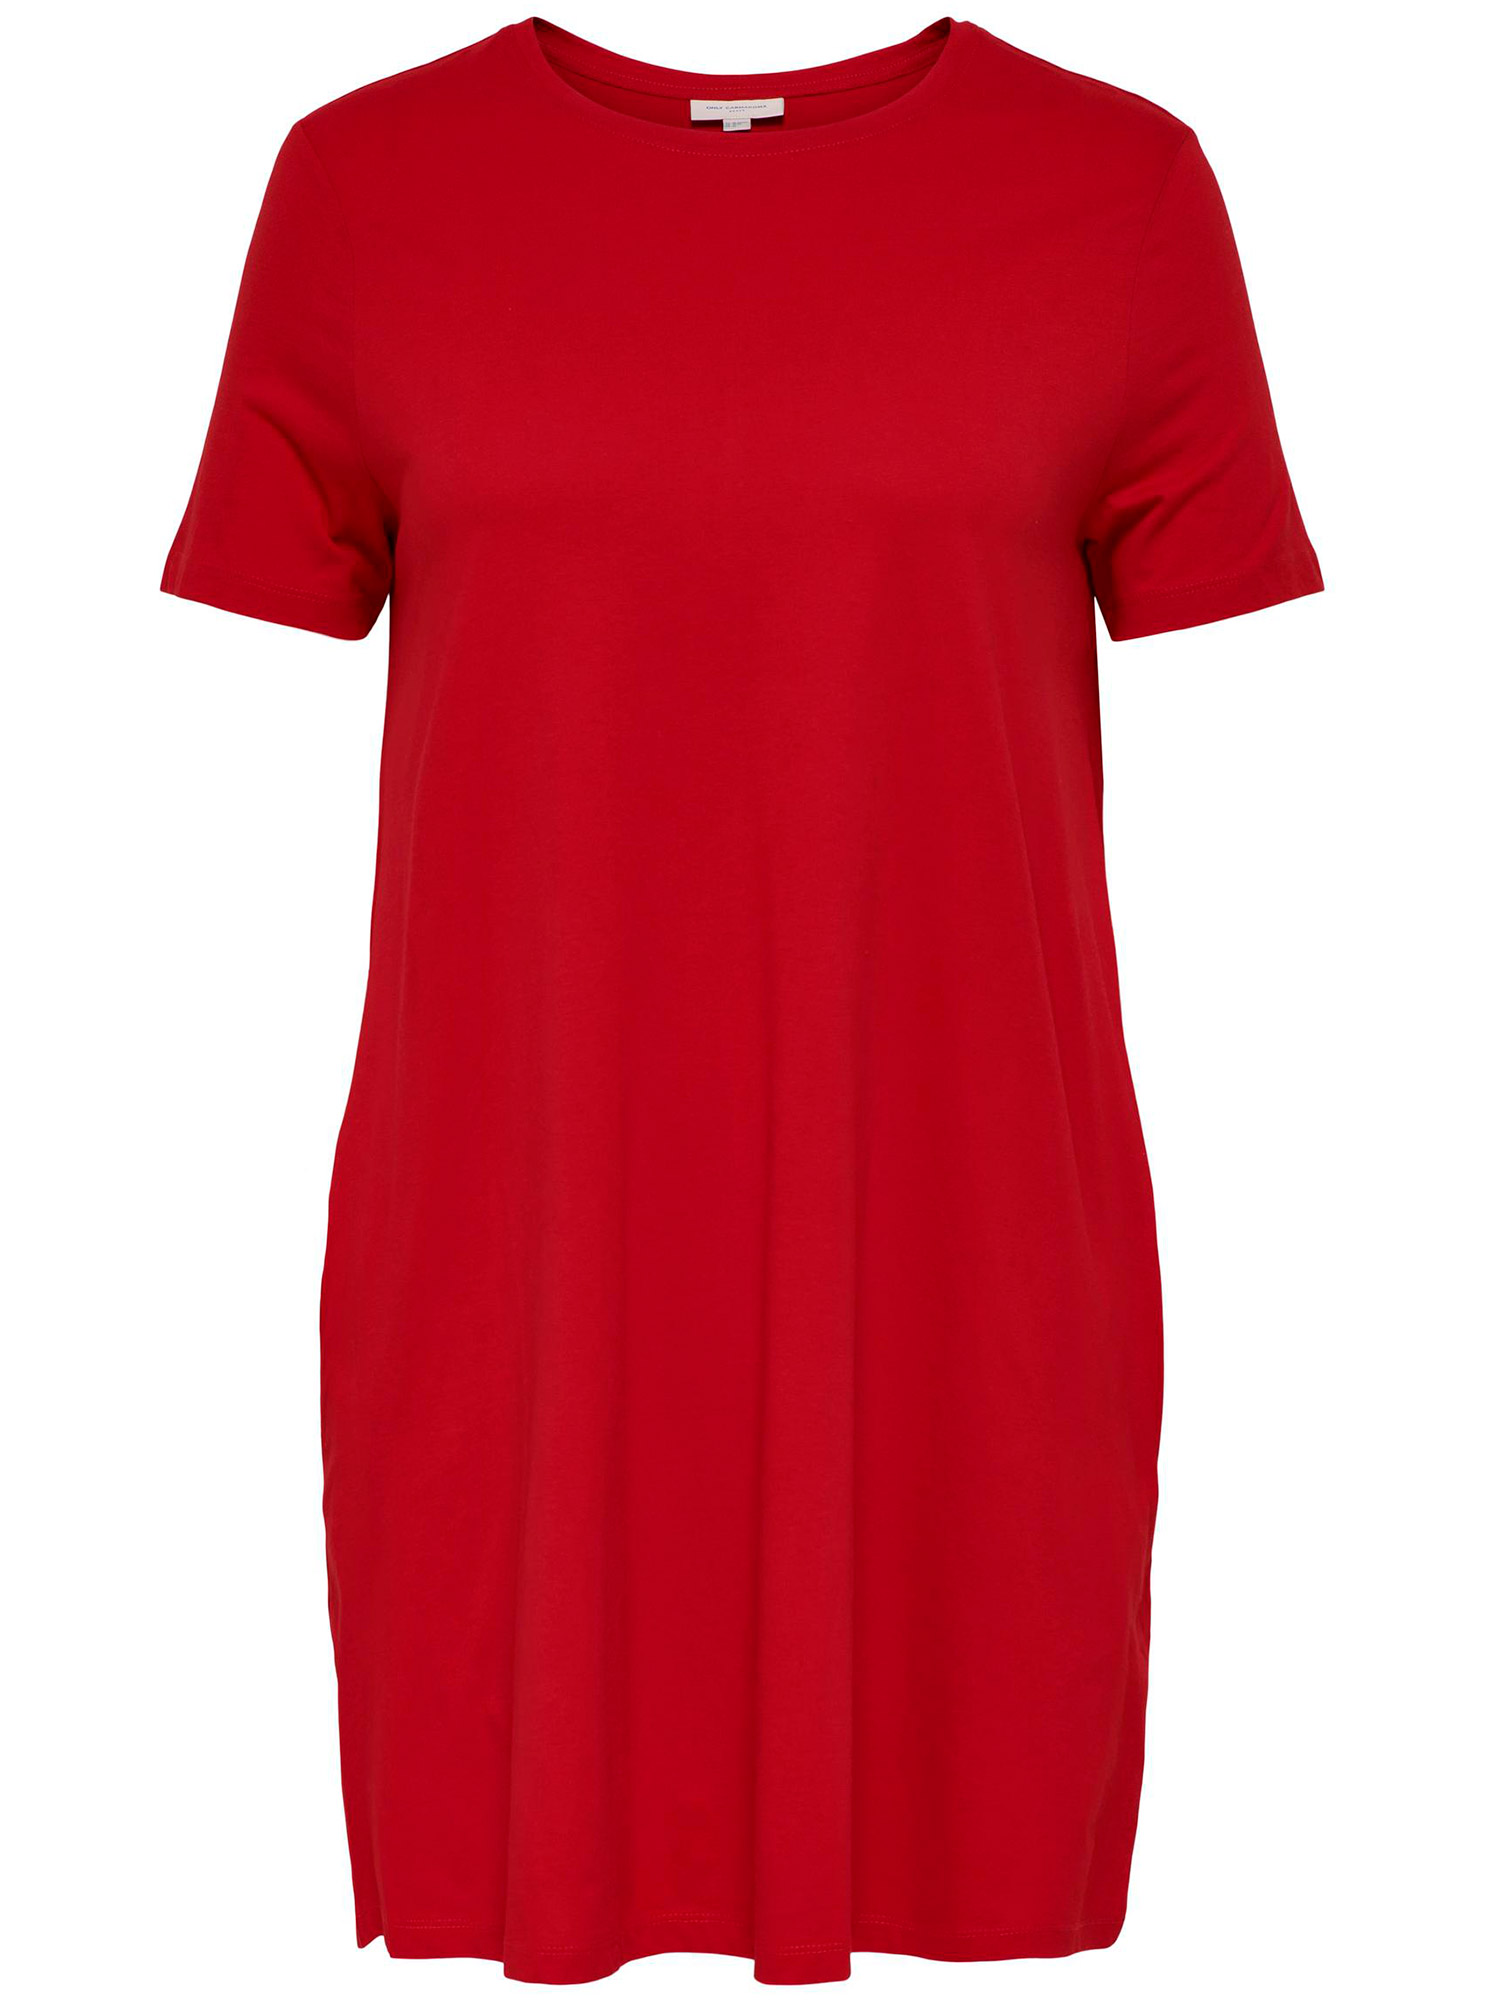 Carapril - Rød kjole i bomullsjersey fra Only Carmakoma